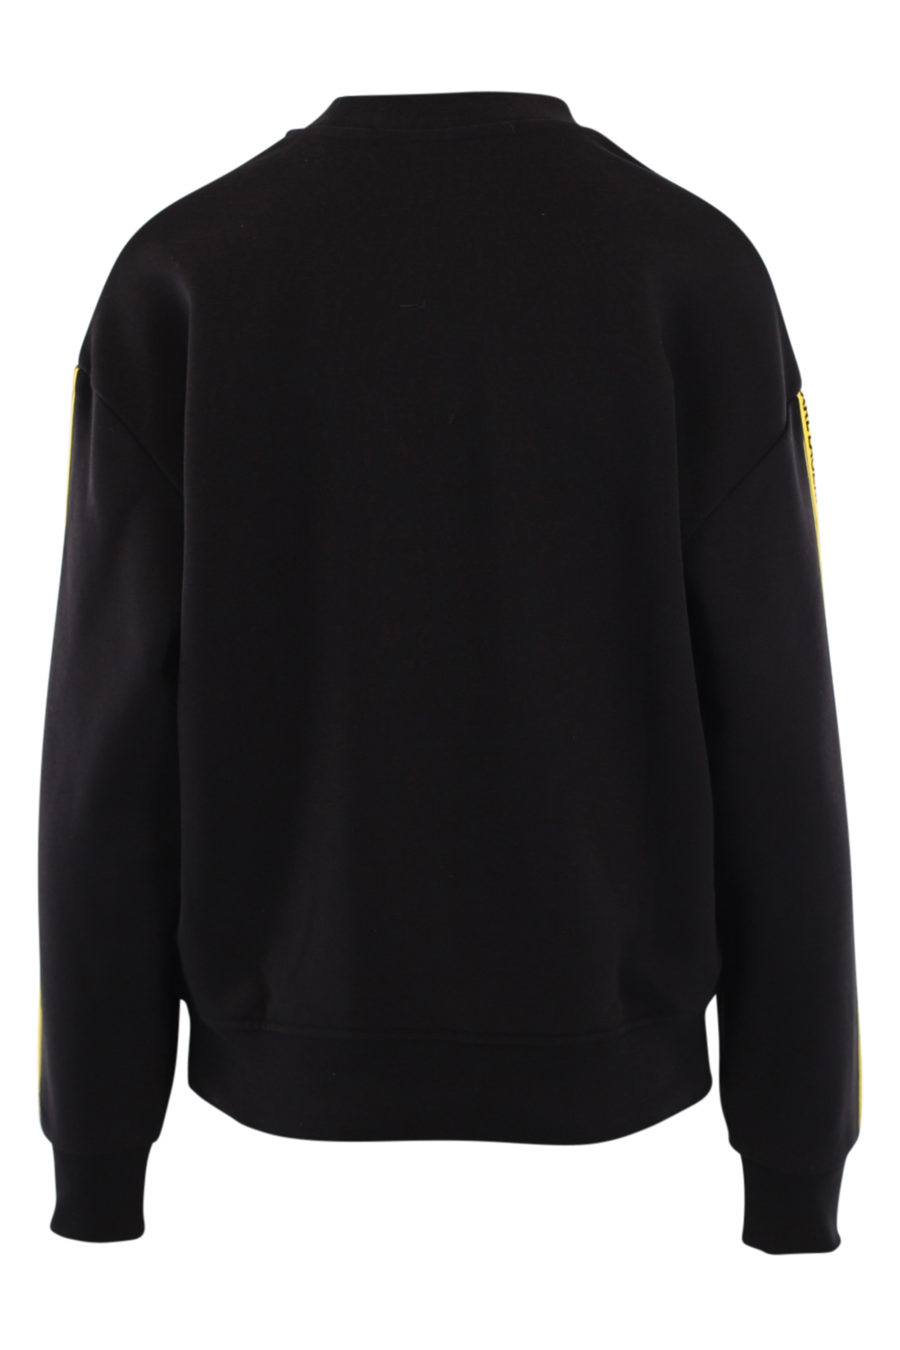 Black unisex sweatshirt with yellow ribbon logo and "smiley" - IMG 0889